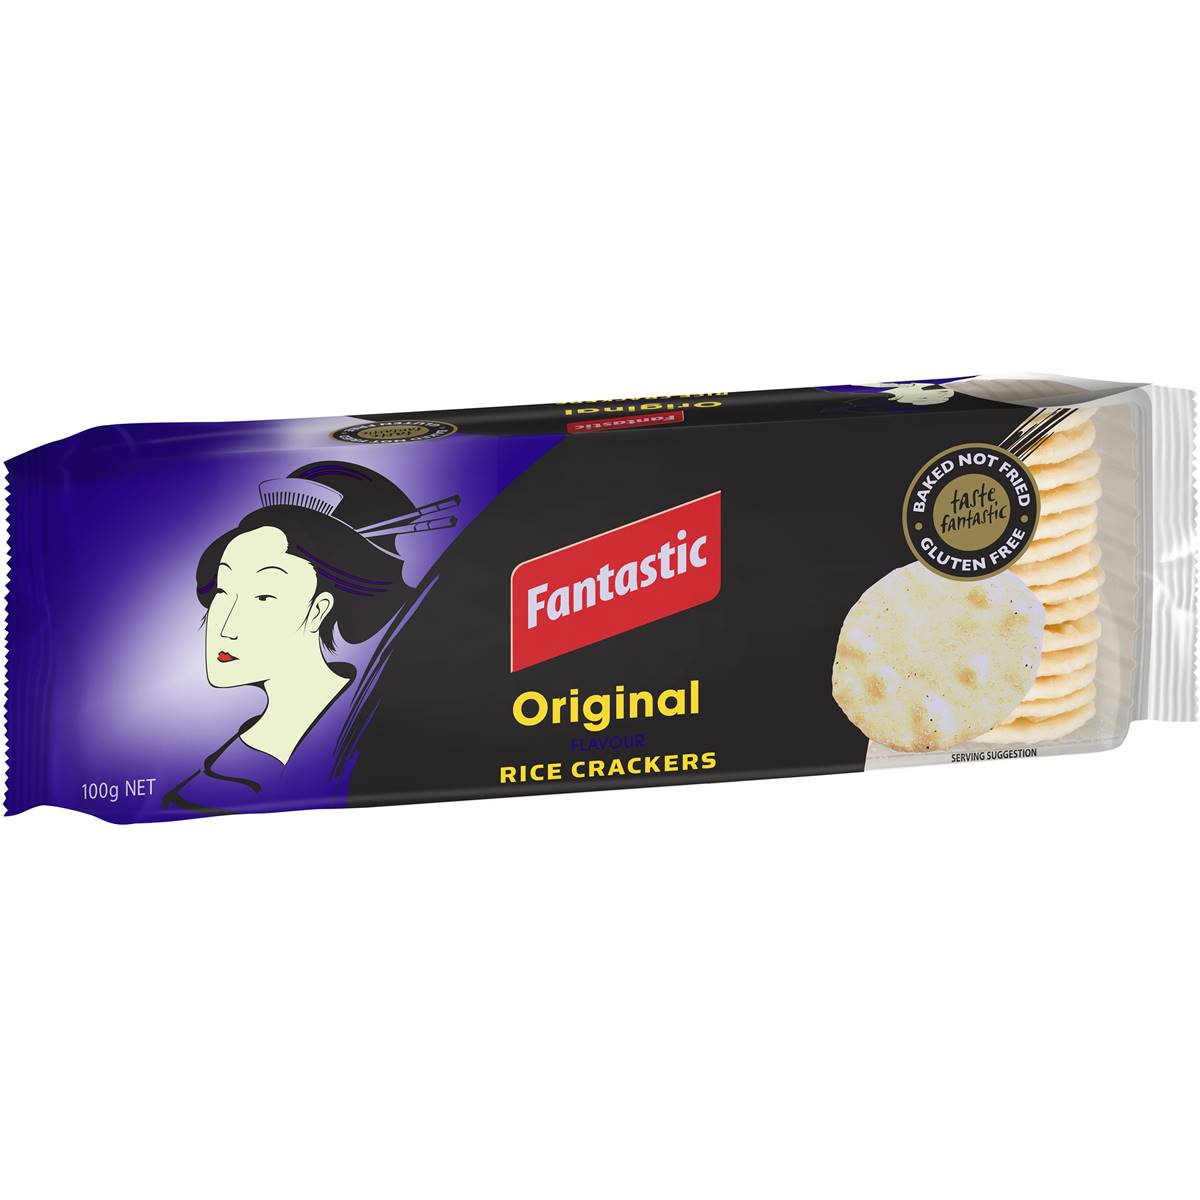 Fantastic Rice Crackers Original